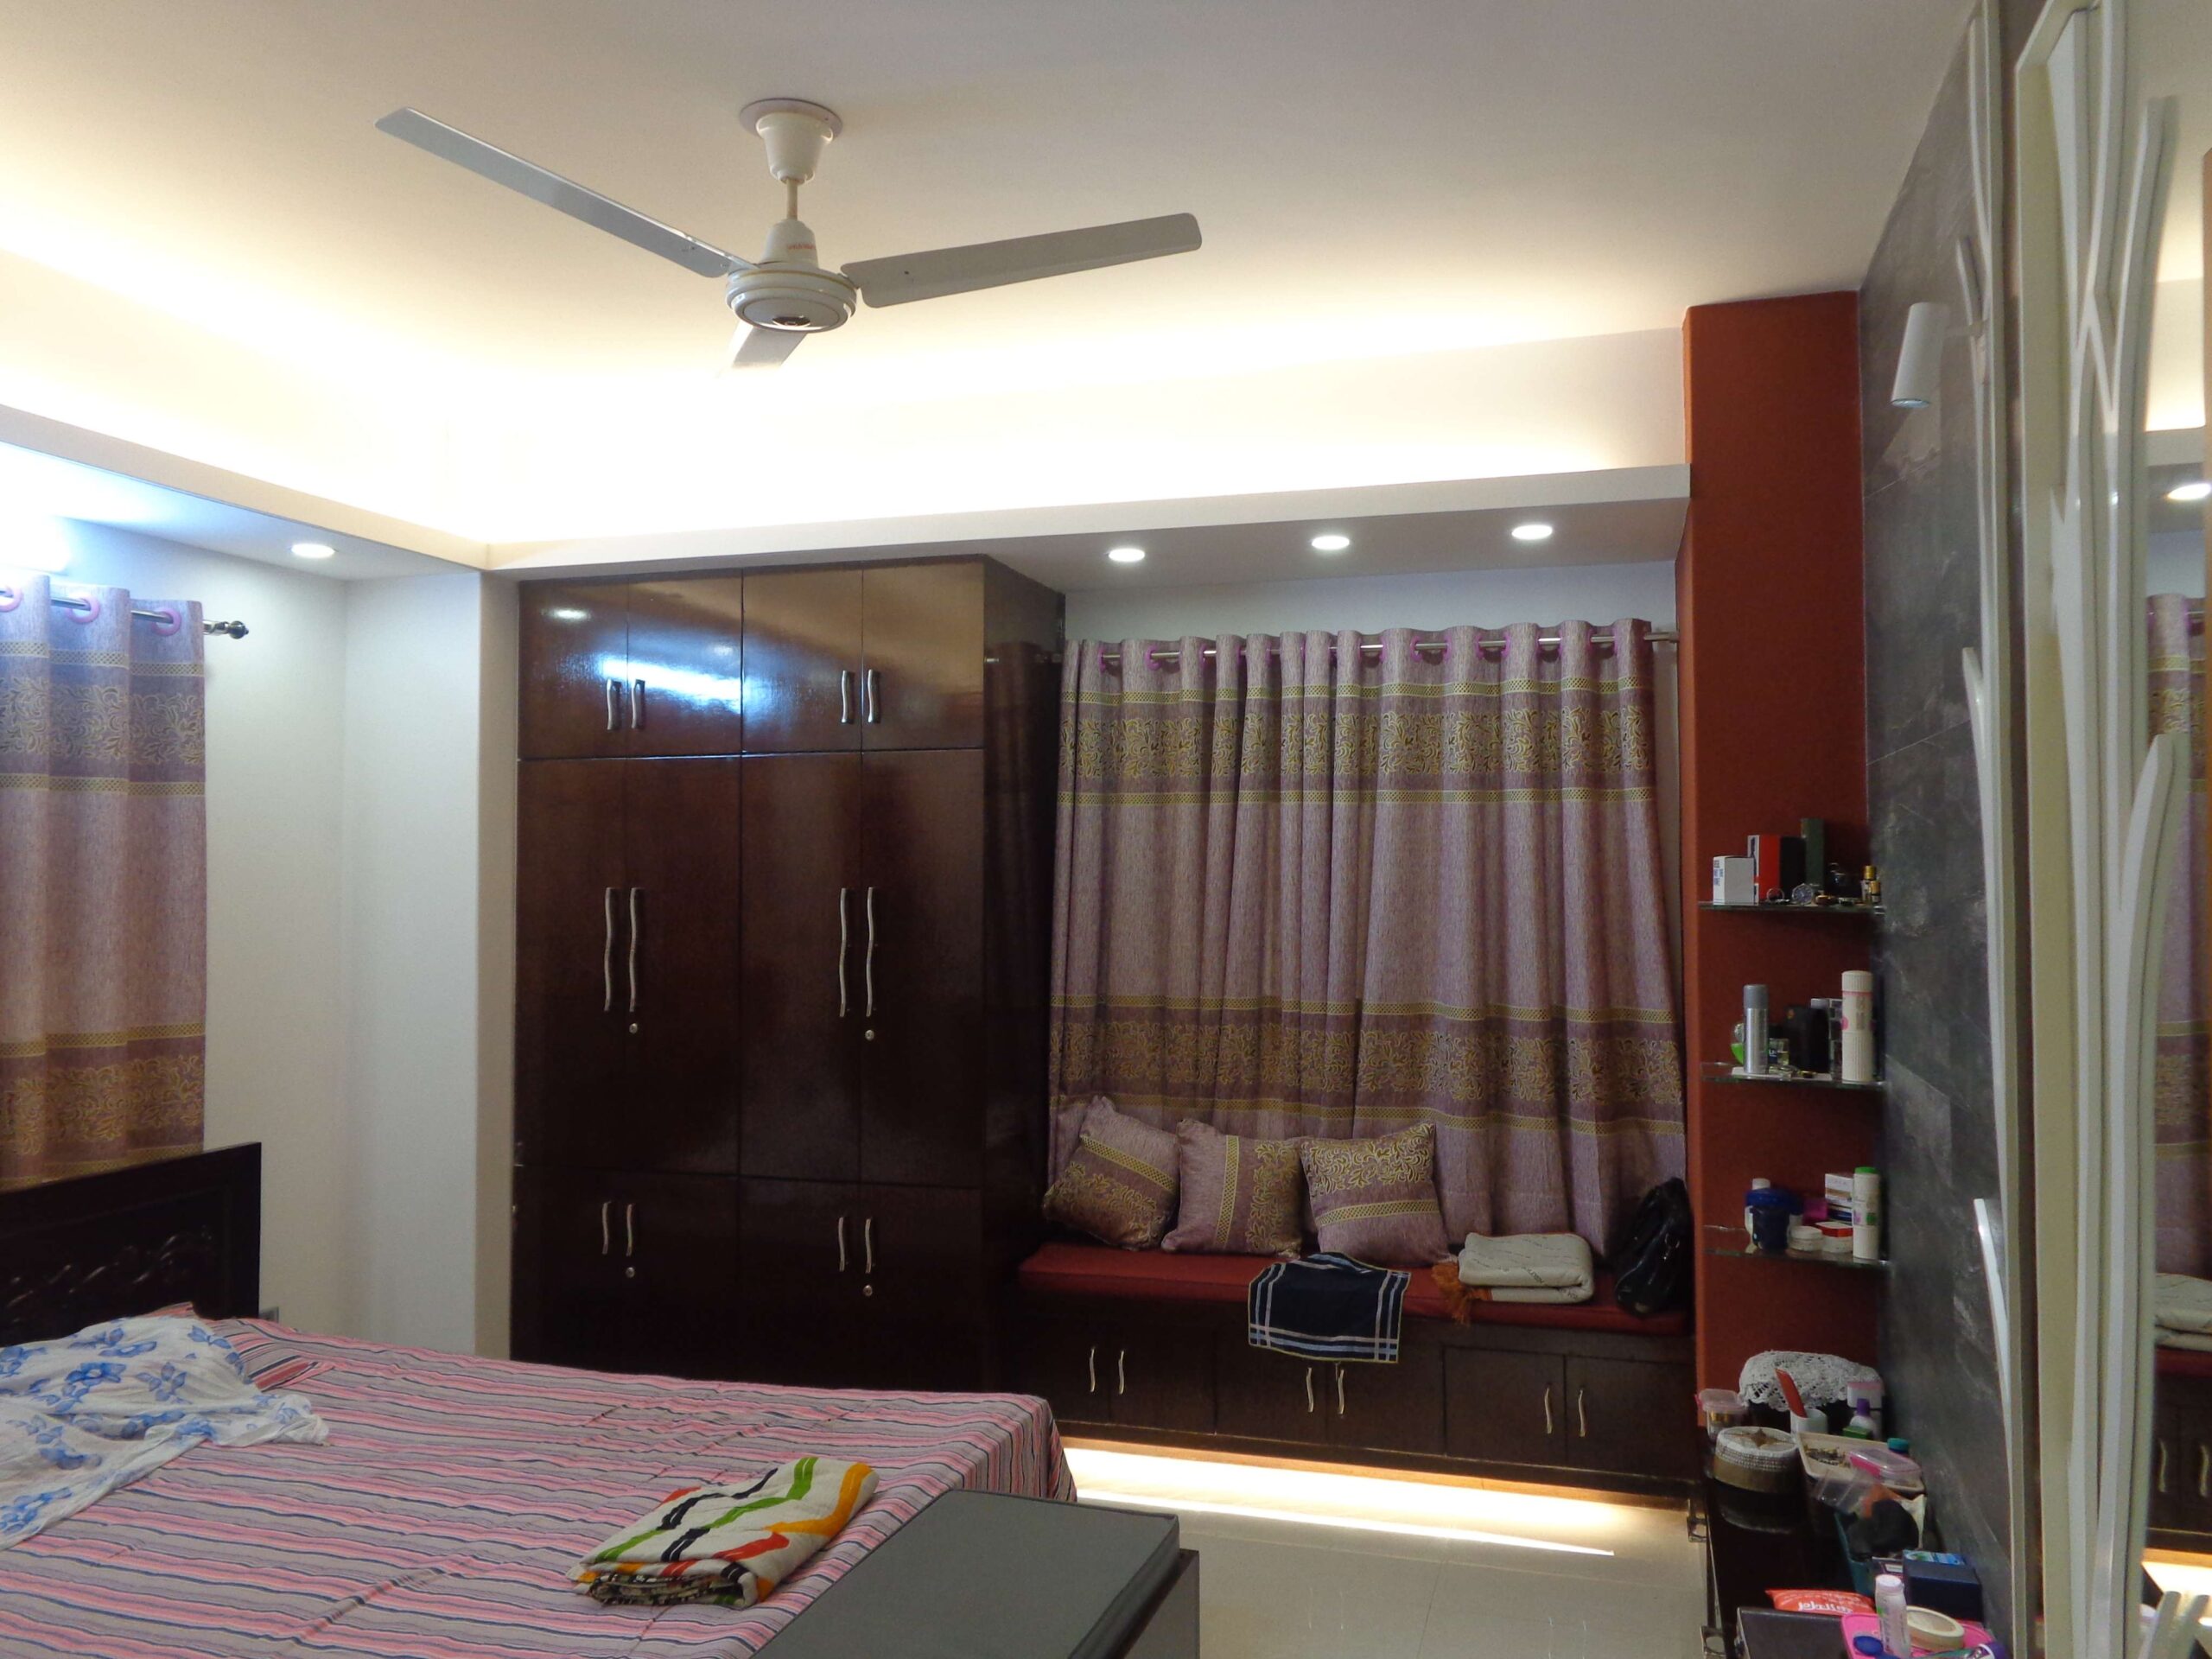 Yasin Mohammadpur Complete Project Master Bedroom Interior Design (17)